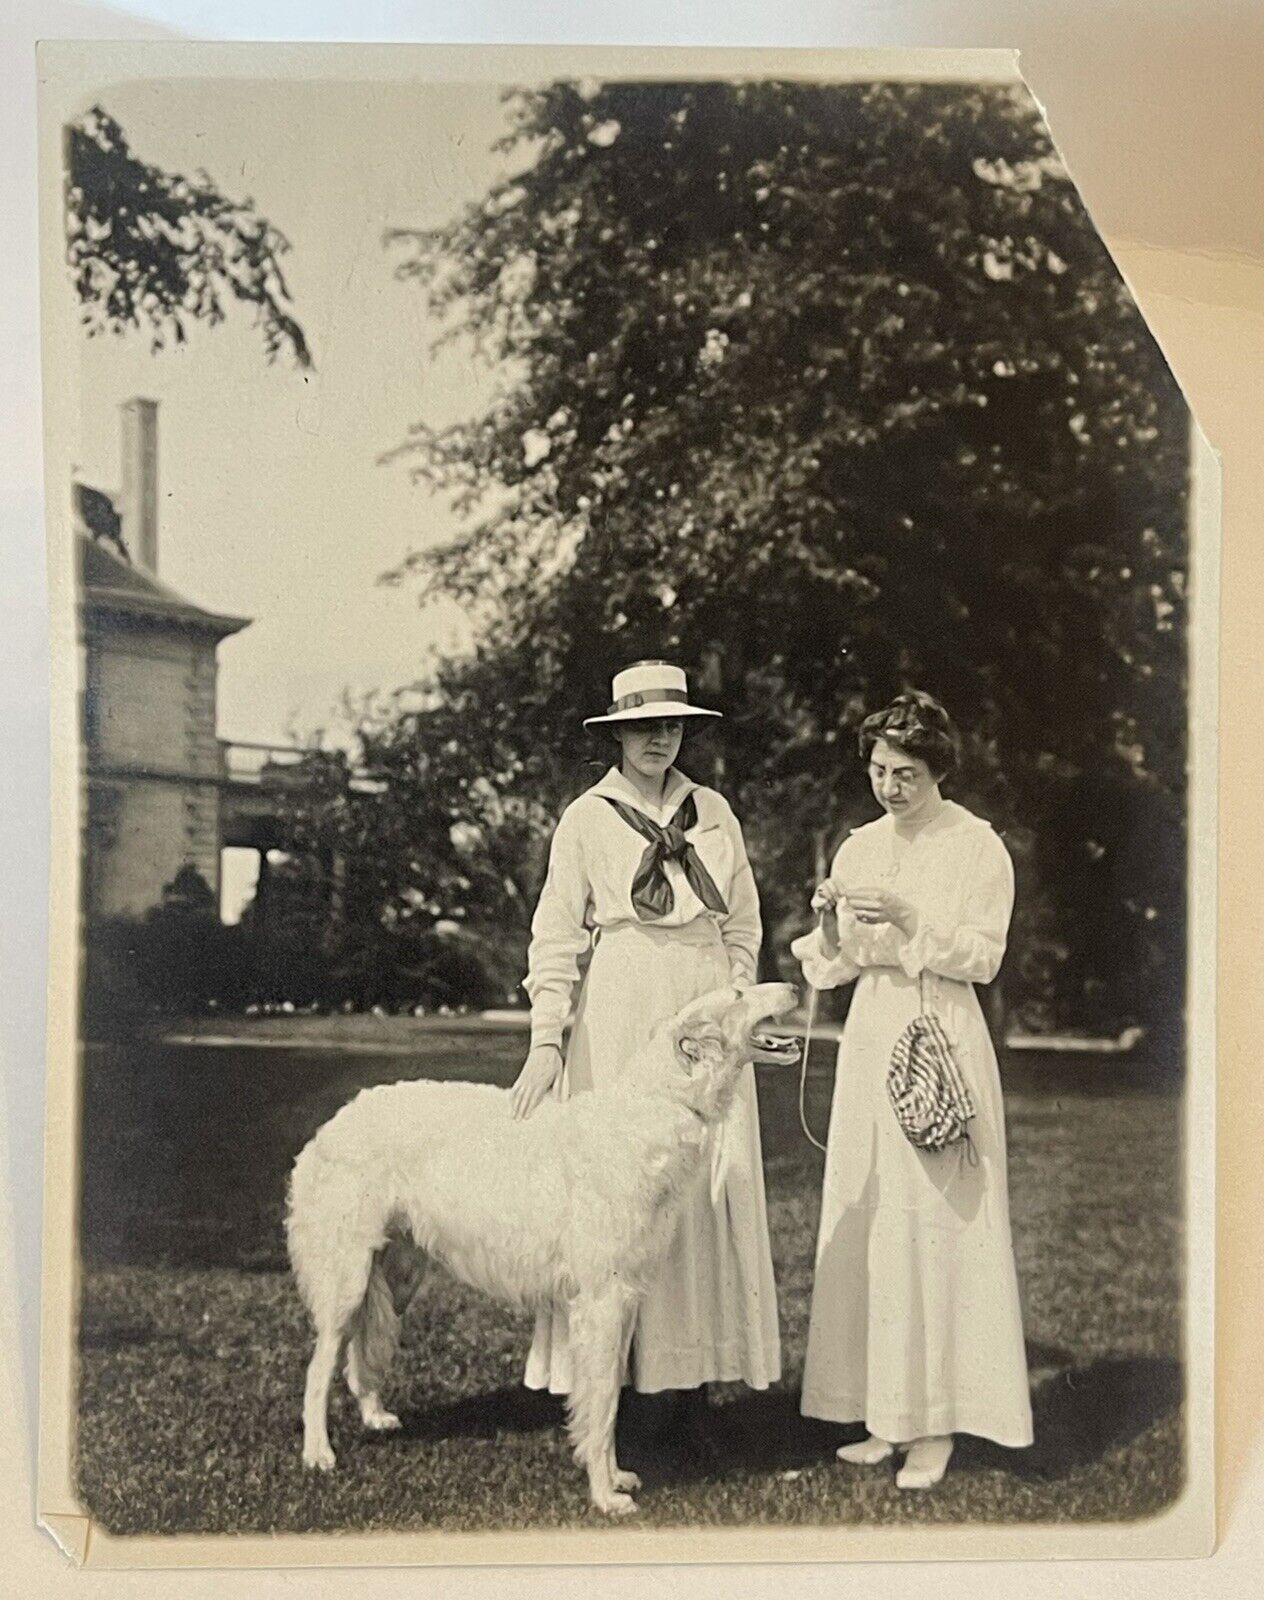 Vintage Photograph Black White Snapshot Women Playing With White Dog Identified